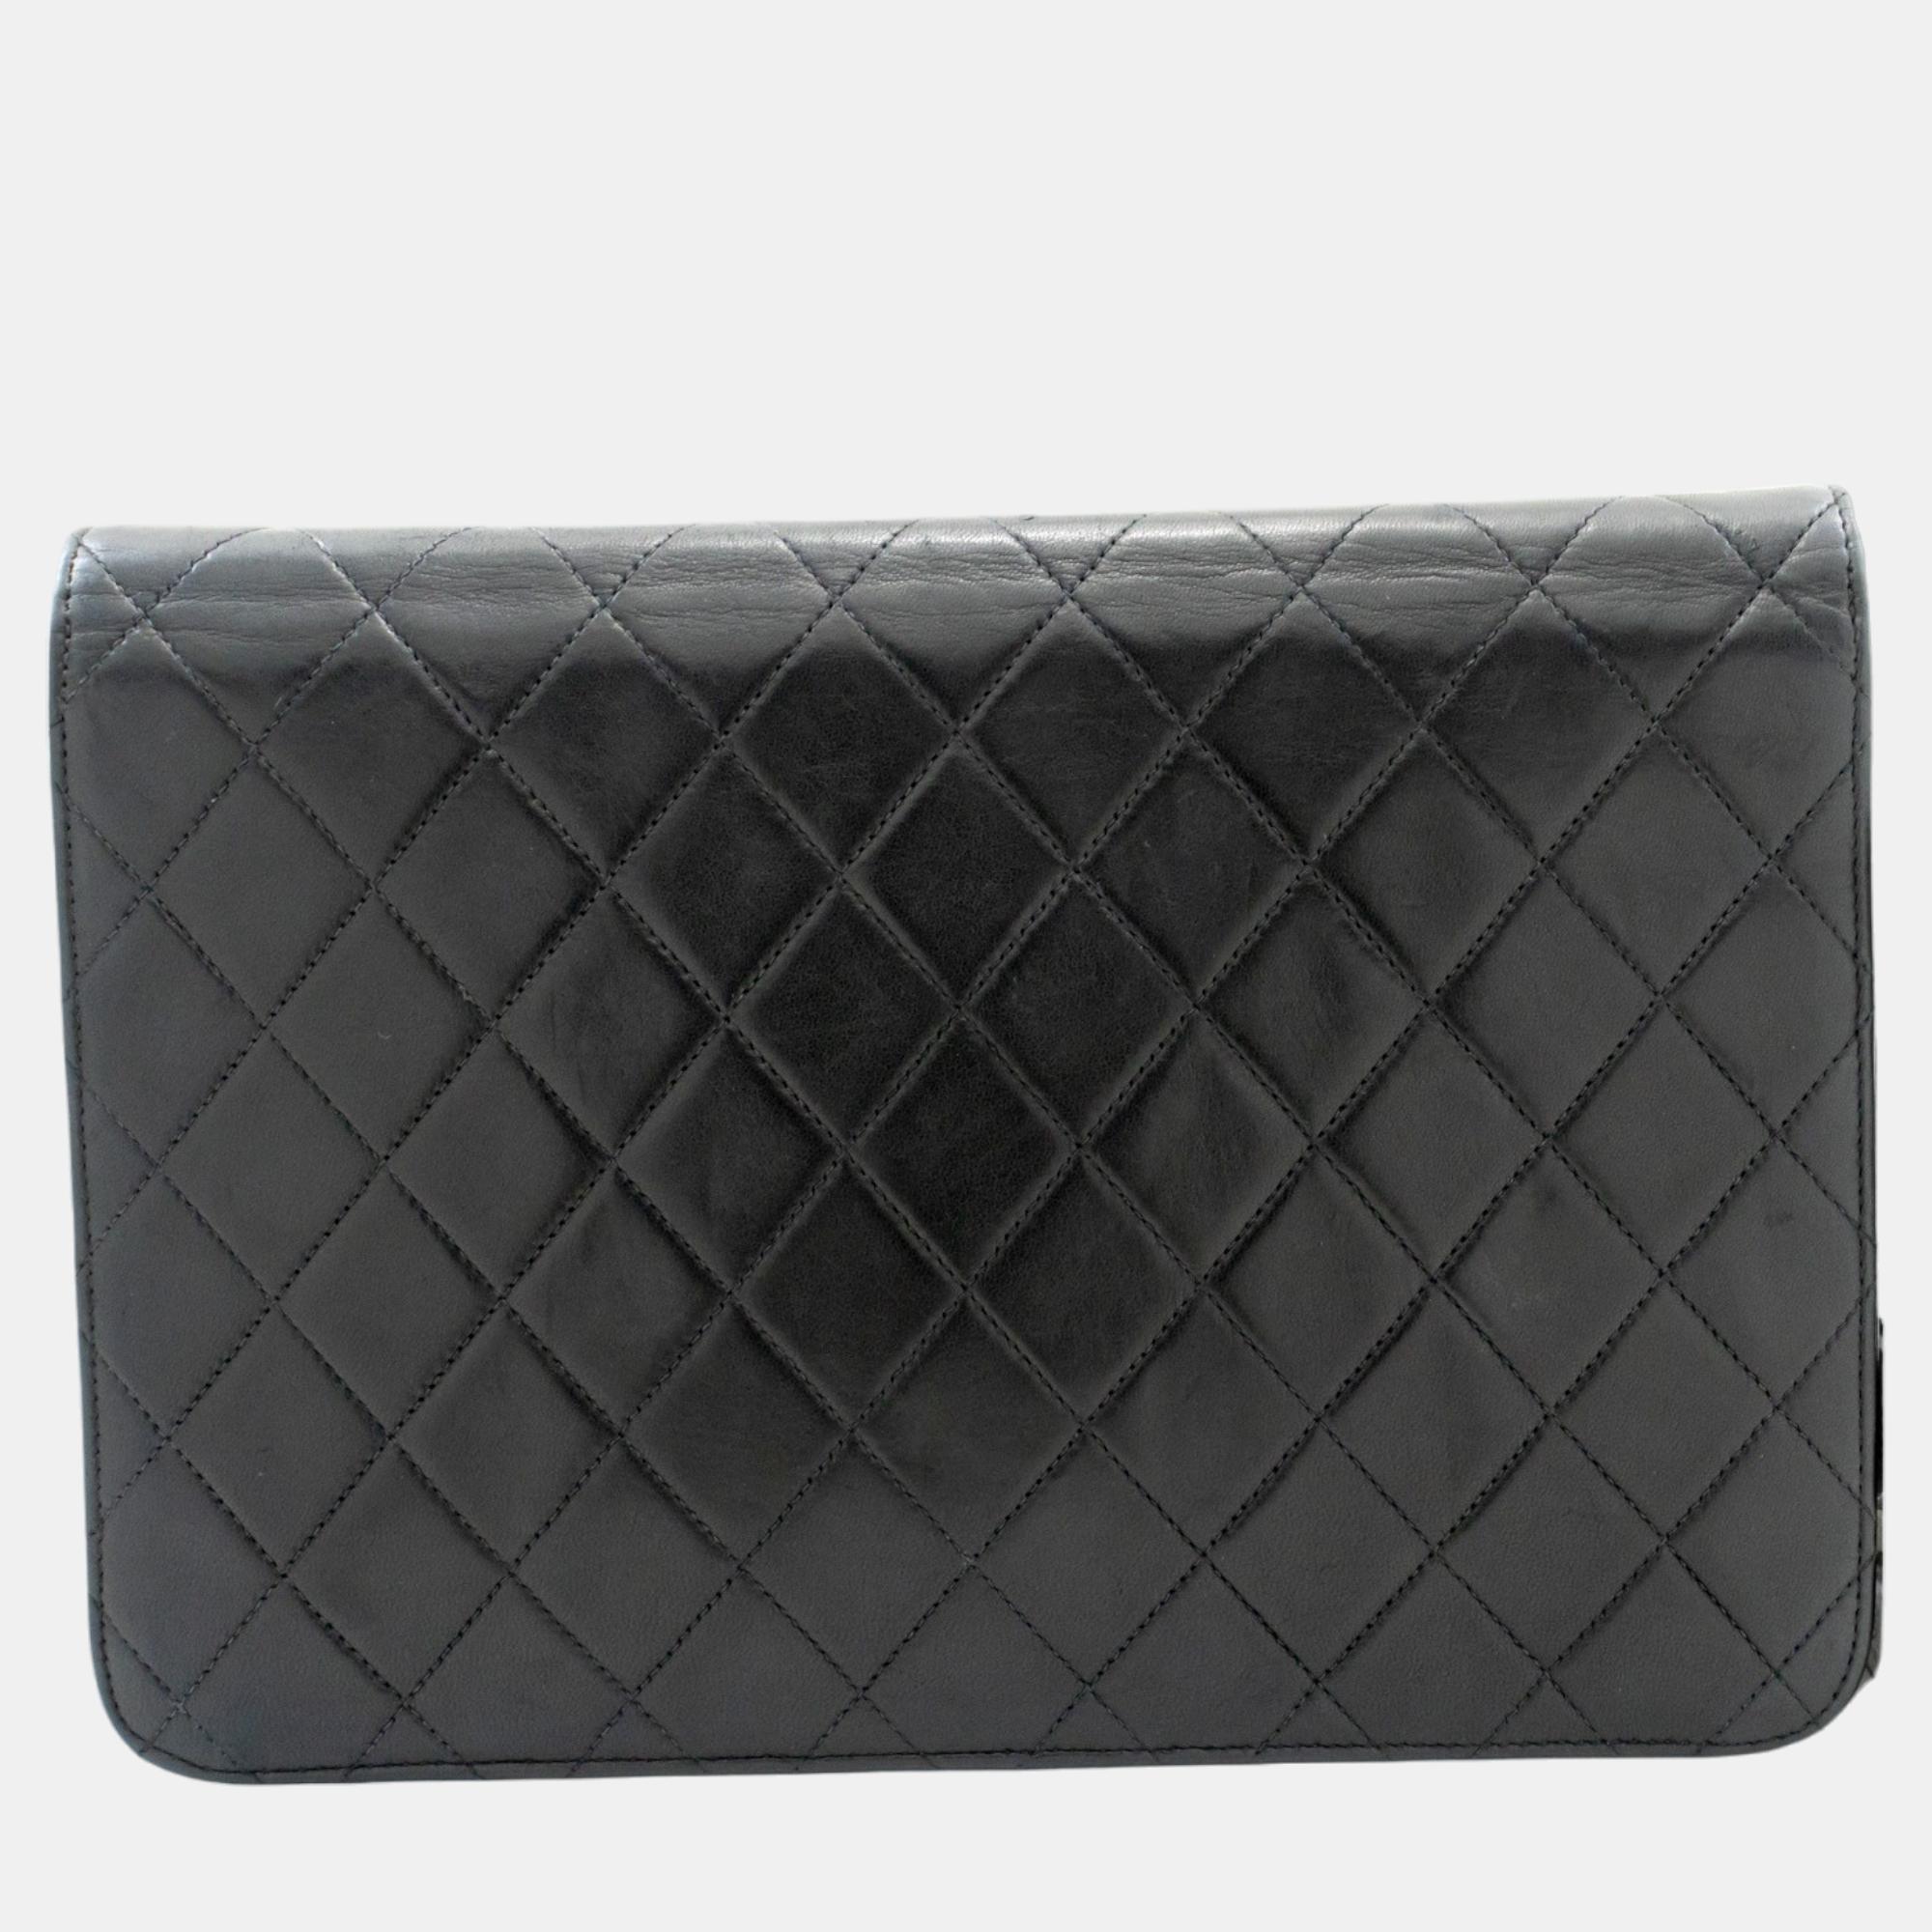 Chanel Black Leather CC Flap Bag